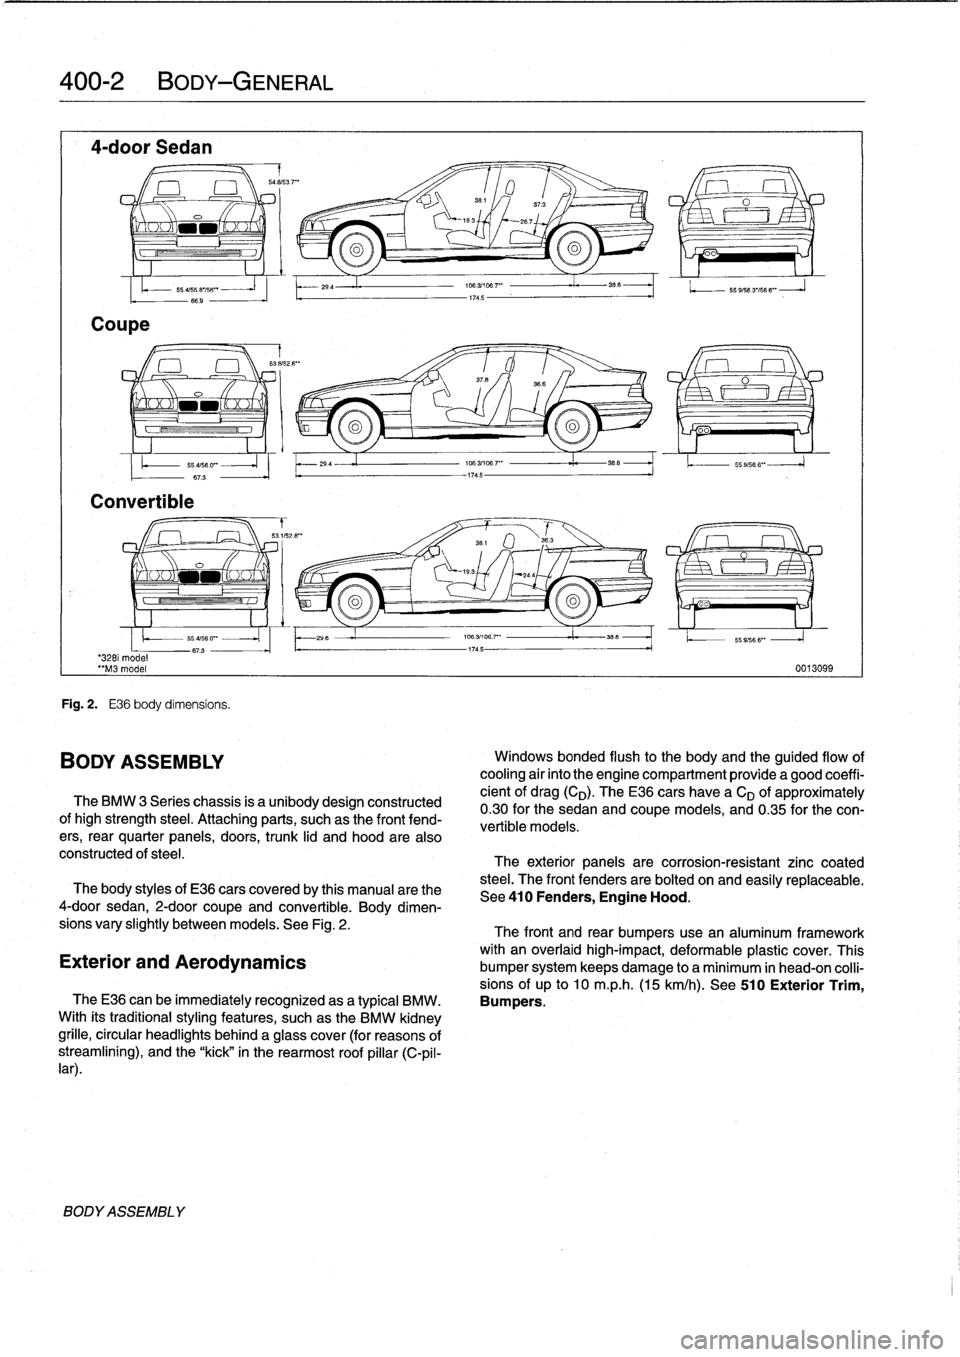 BMW 323i 1998 E36 Workshop Manual 
400-2
BODY-GENERAL

4-door
Sedan

Coupe

-
saas3
.7""

351
/

	

37
.3
O

	

I
x
`-193

	

267

o
oa

3281
model
"M3
model

Convertible

BODYASSEMBLY

55
ass
.e
iss
""
-
66
.9
-

Fig
.
2
.

	

E36
b